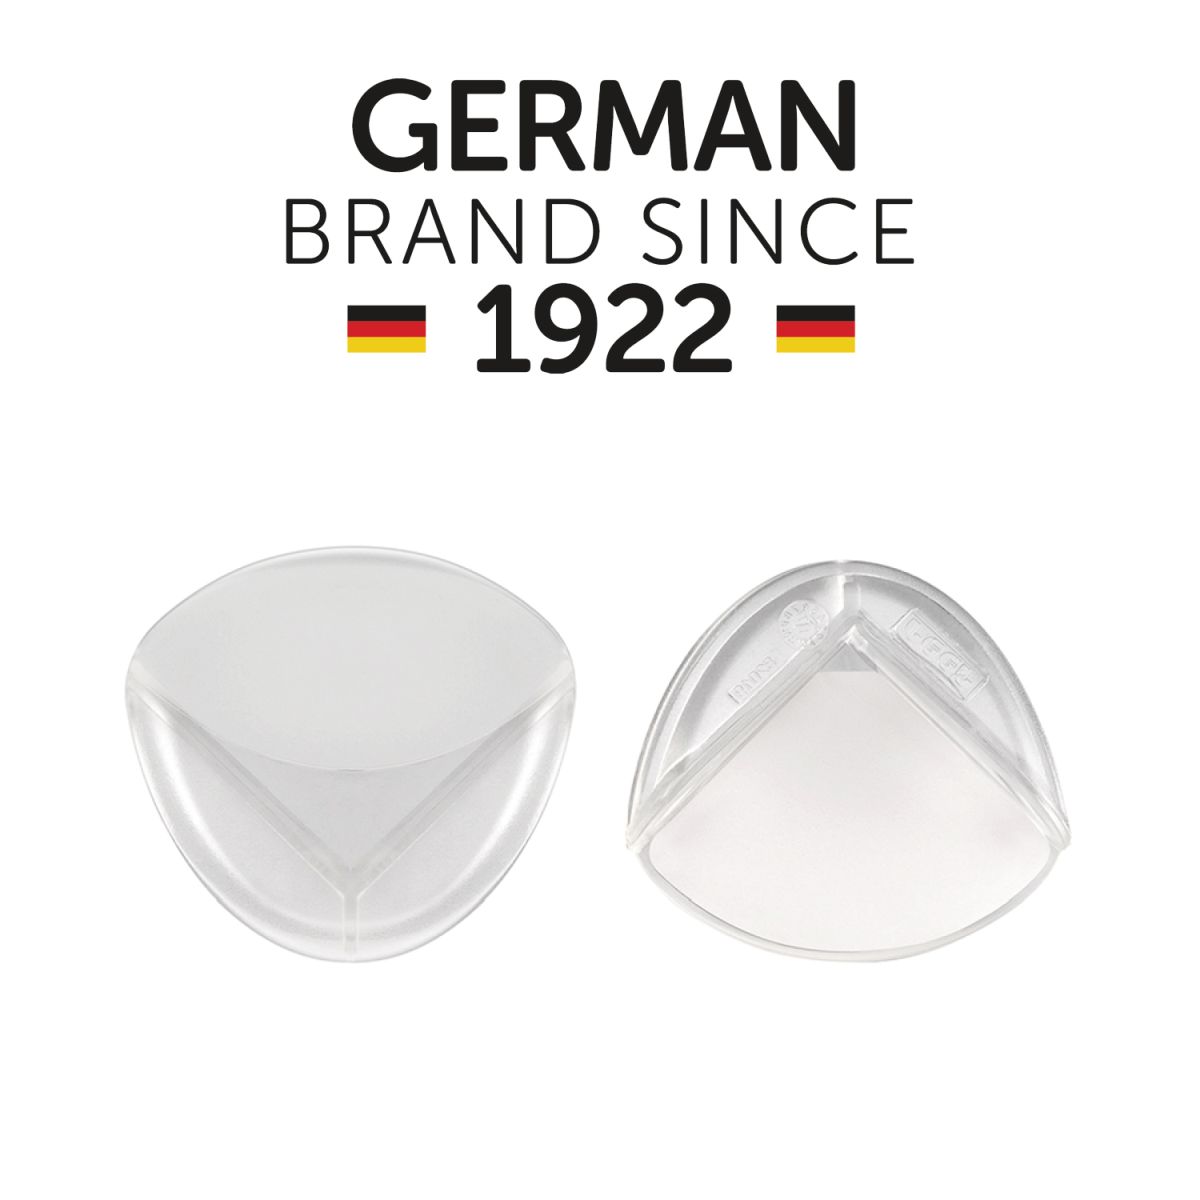 Eckenschutz Made in Germany